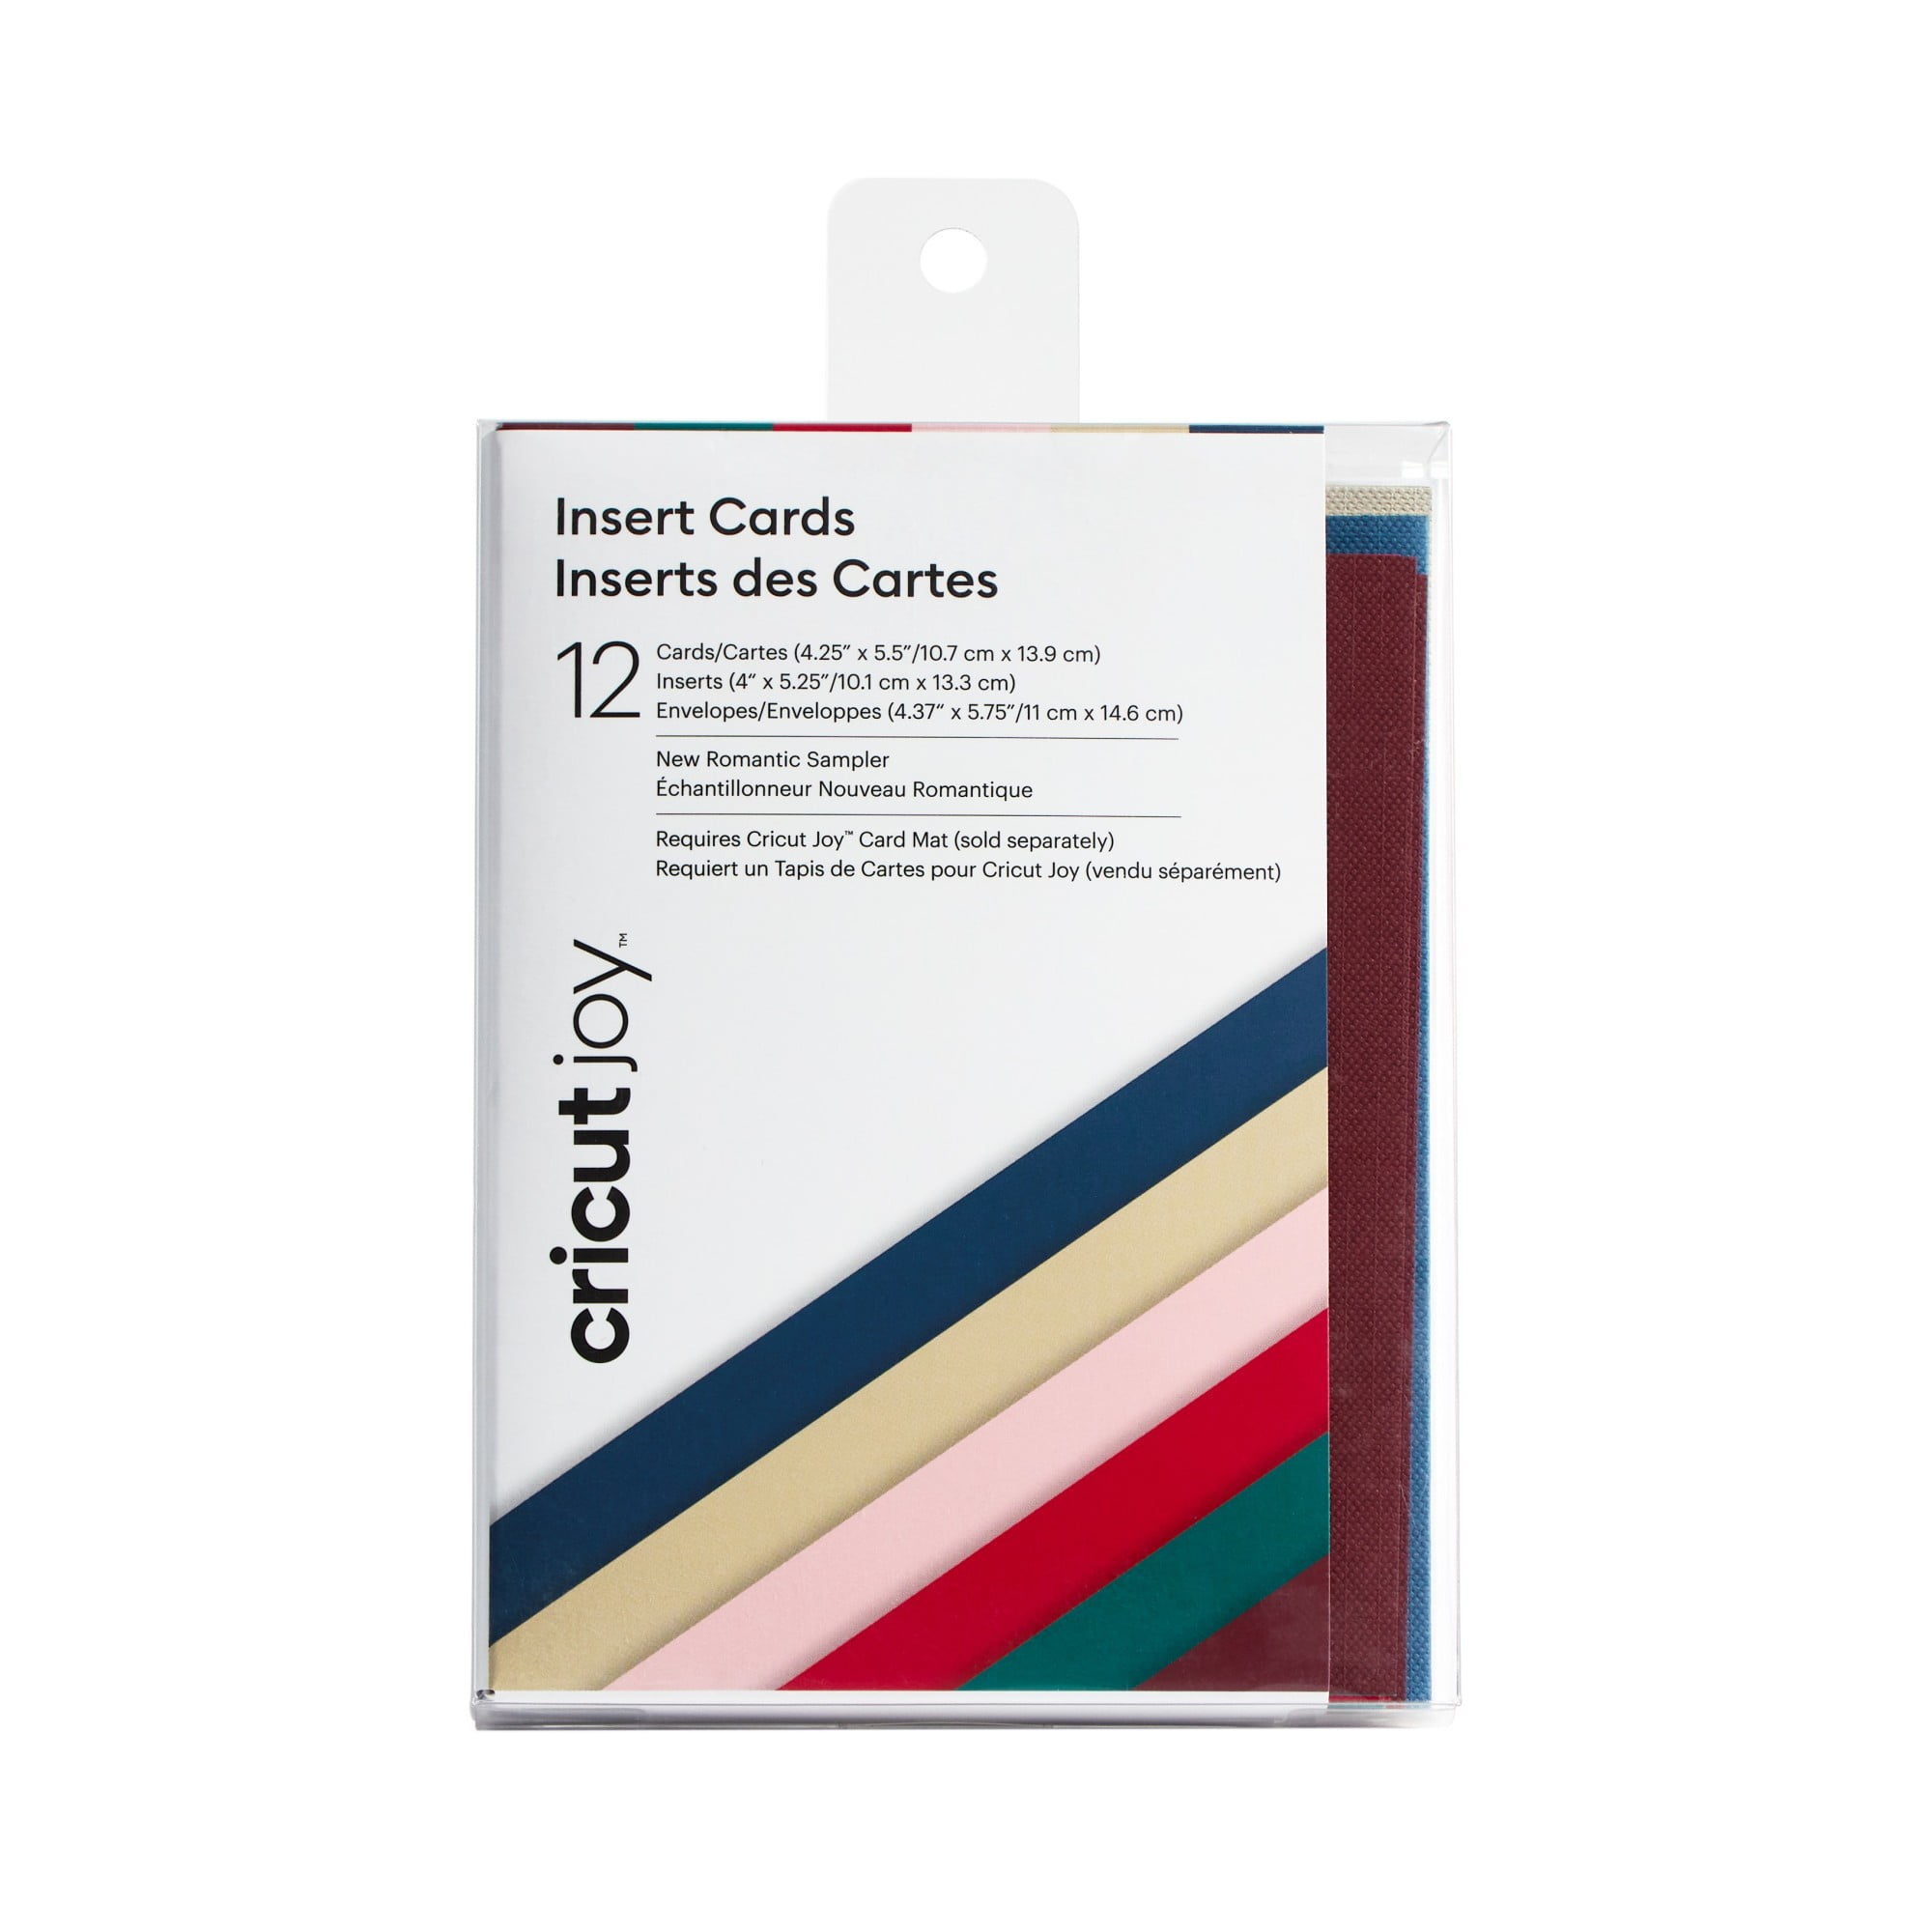 Cricut Joy™ Insert Cards, New Romantic Sampler - A2, 4.25 x 5.5